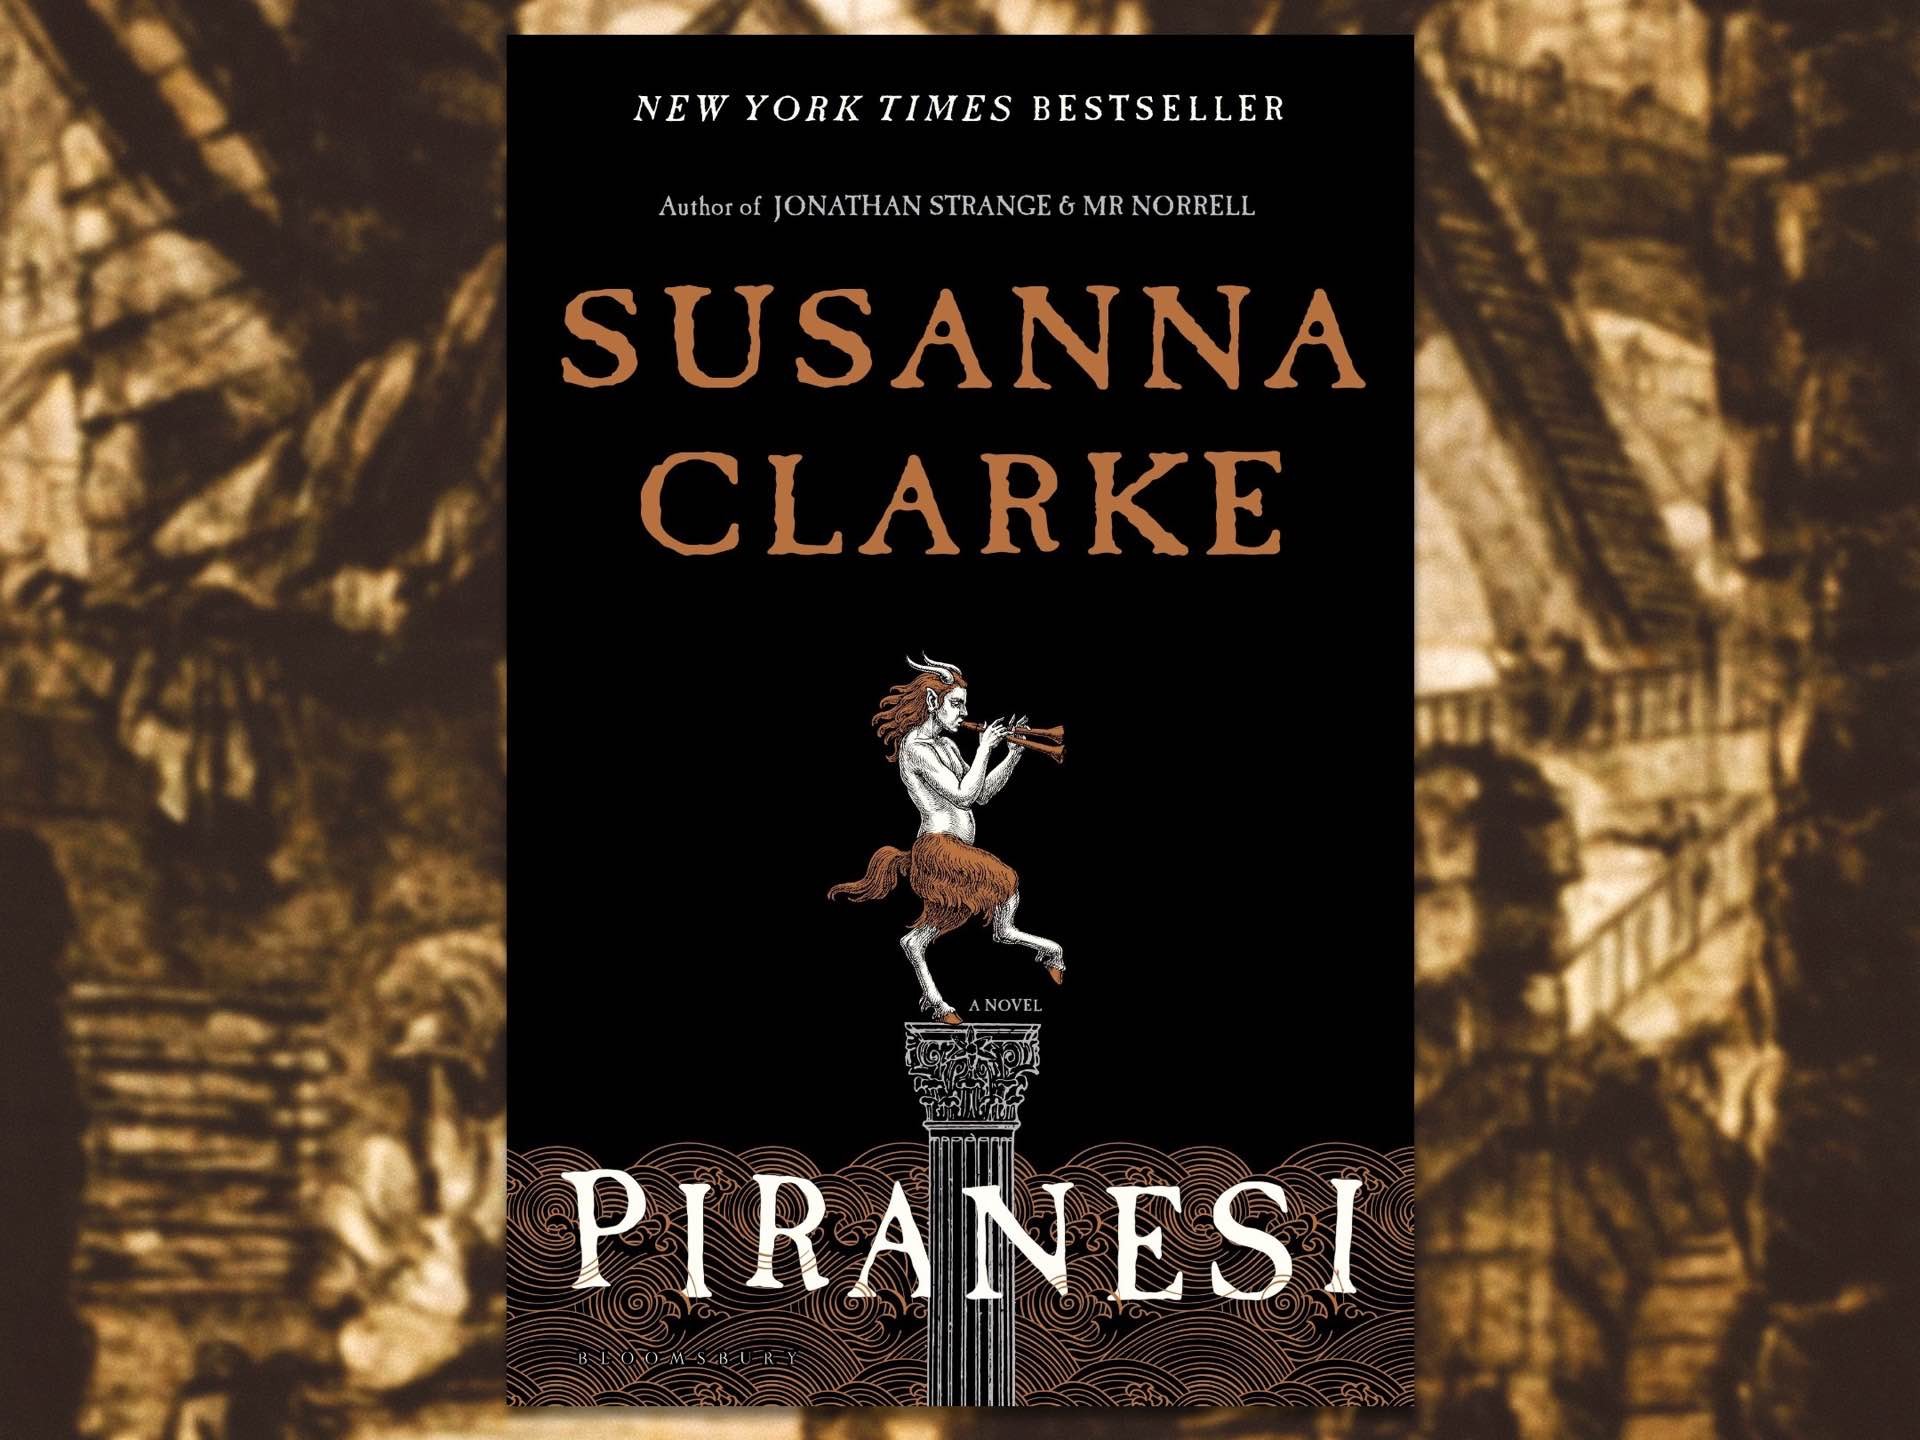 Piranesi by Susanna Clarke. ($17 hardcover)